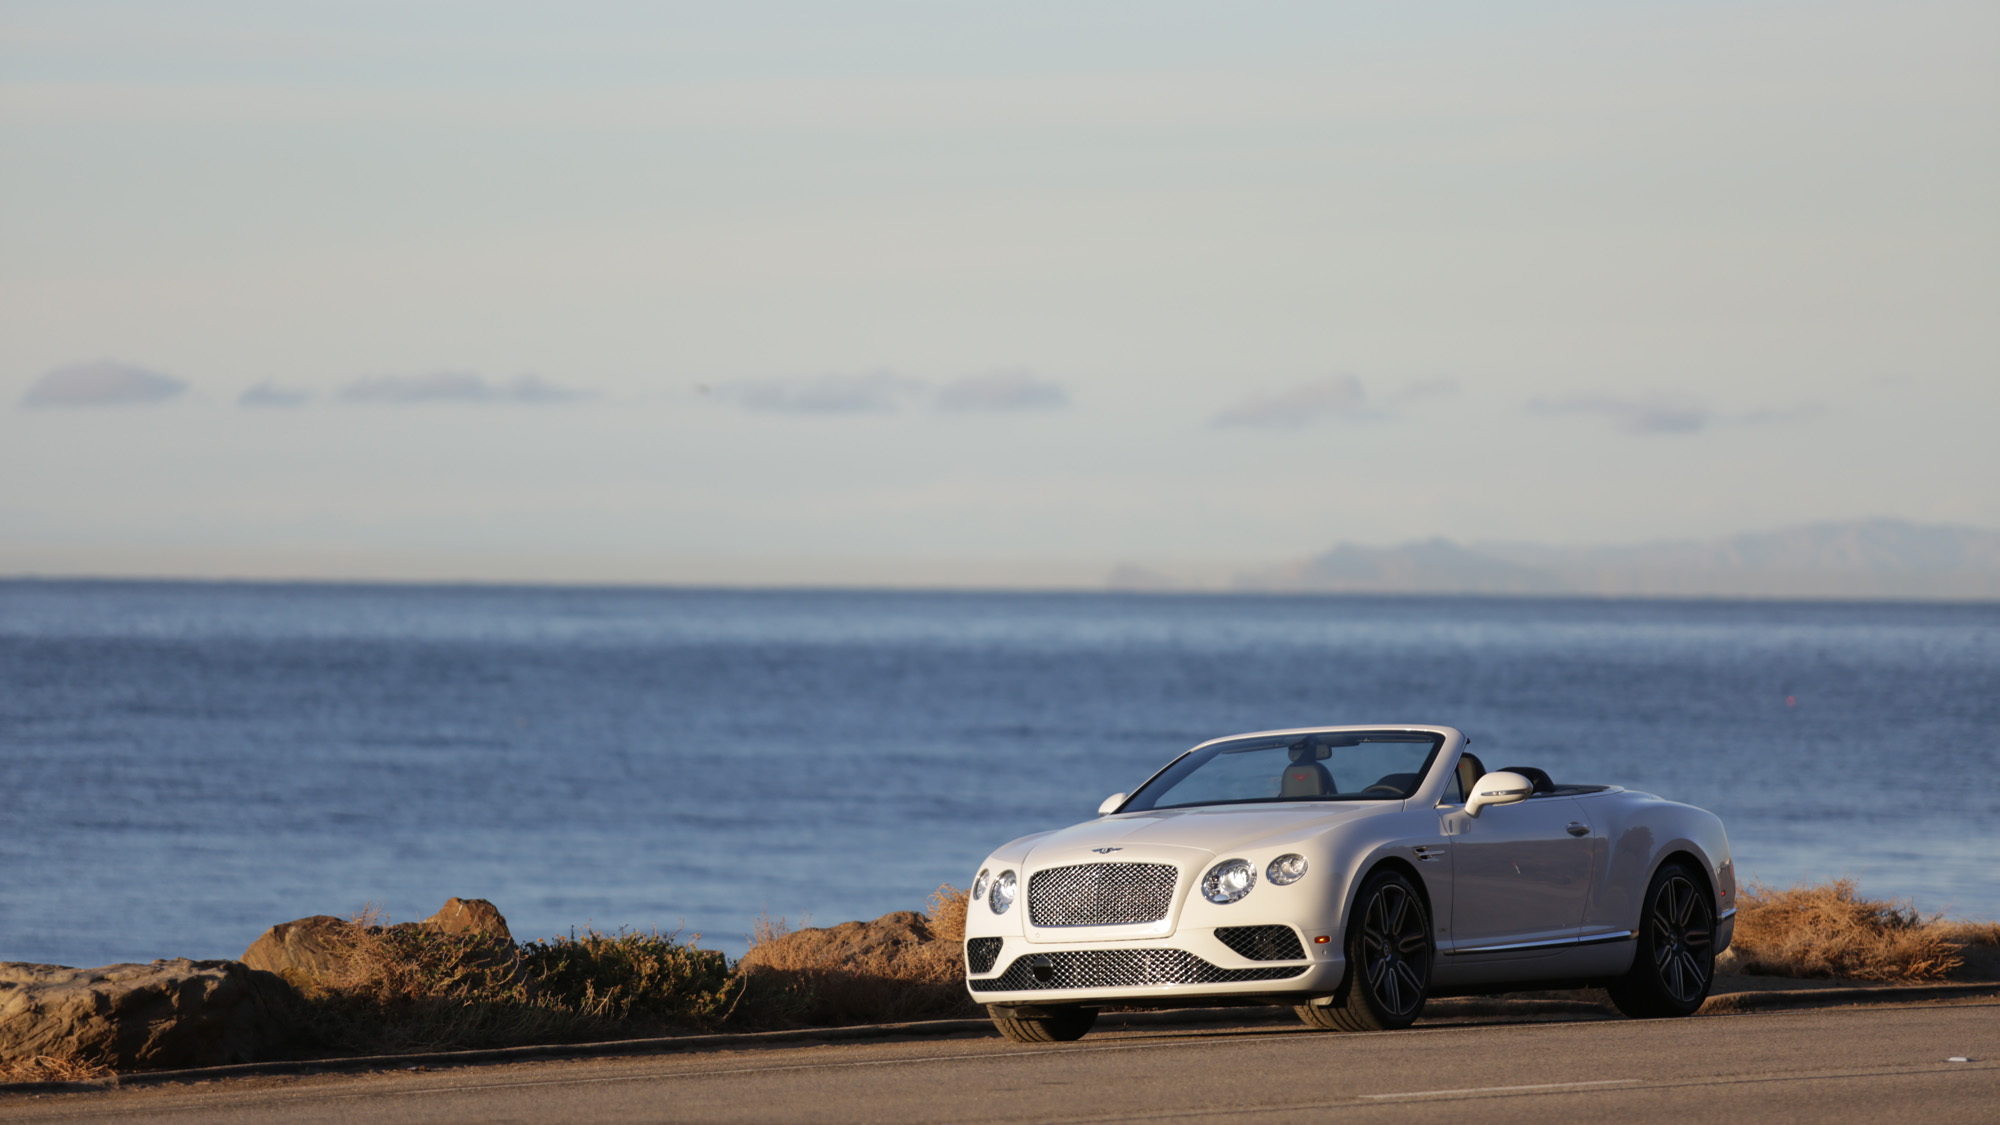 2016 Bentley Continental Gt Convertible Coastline Drive